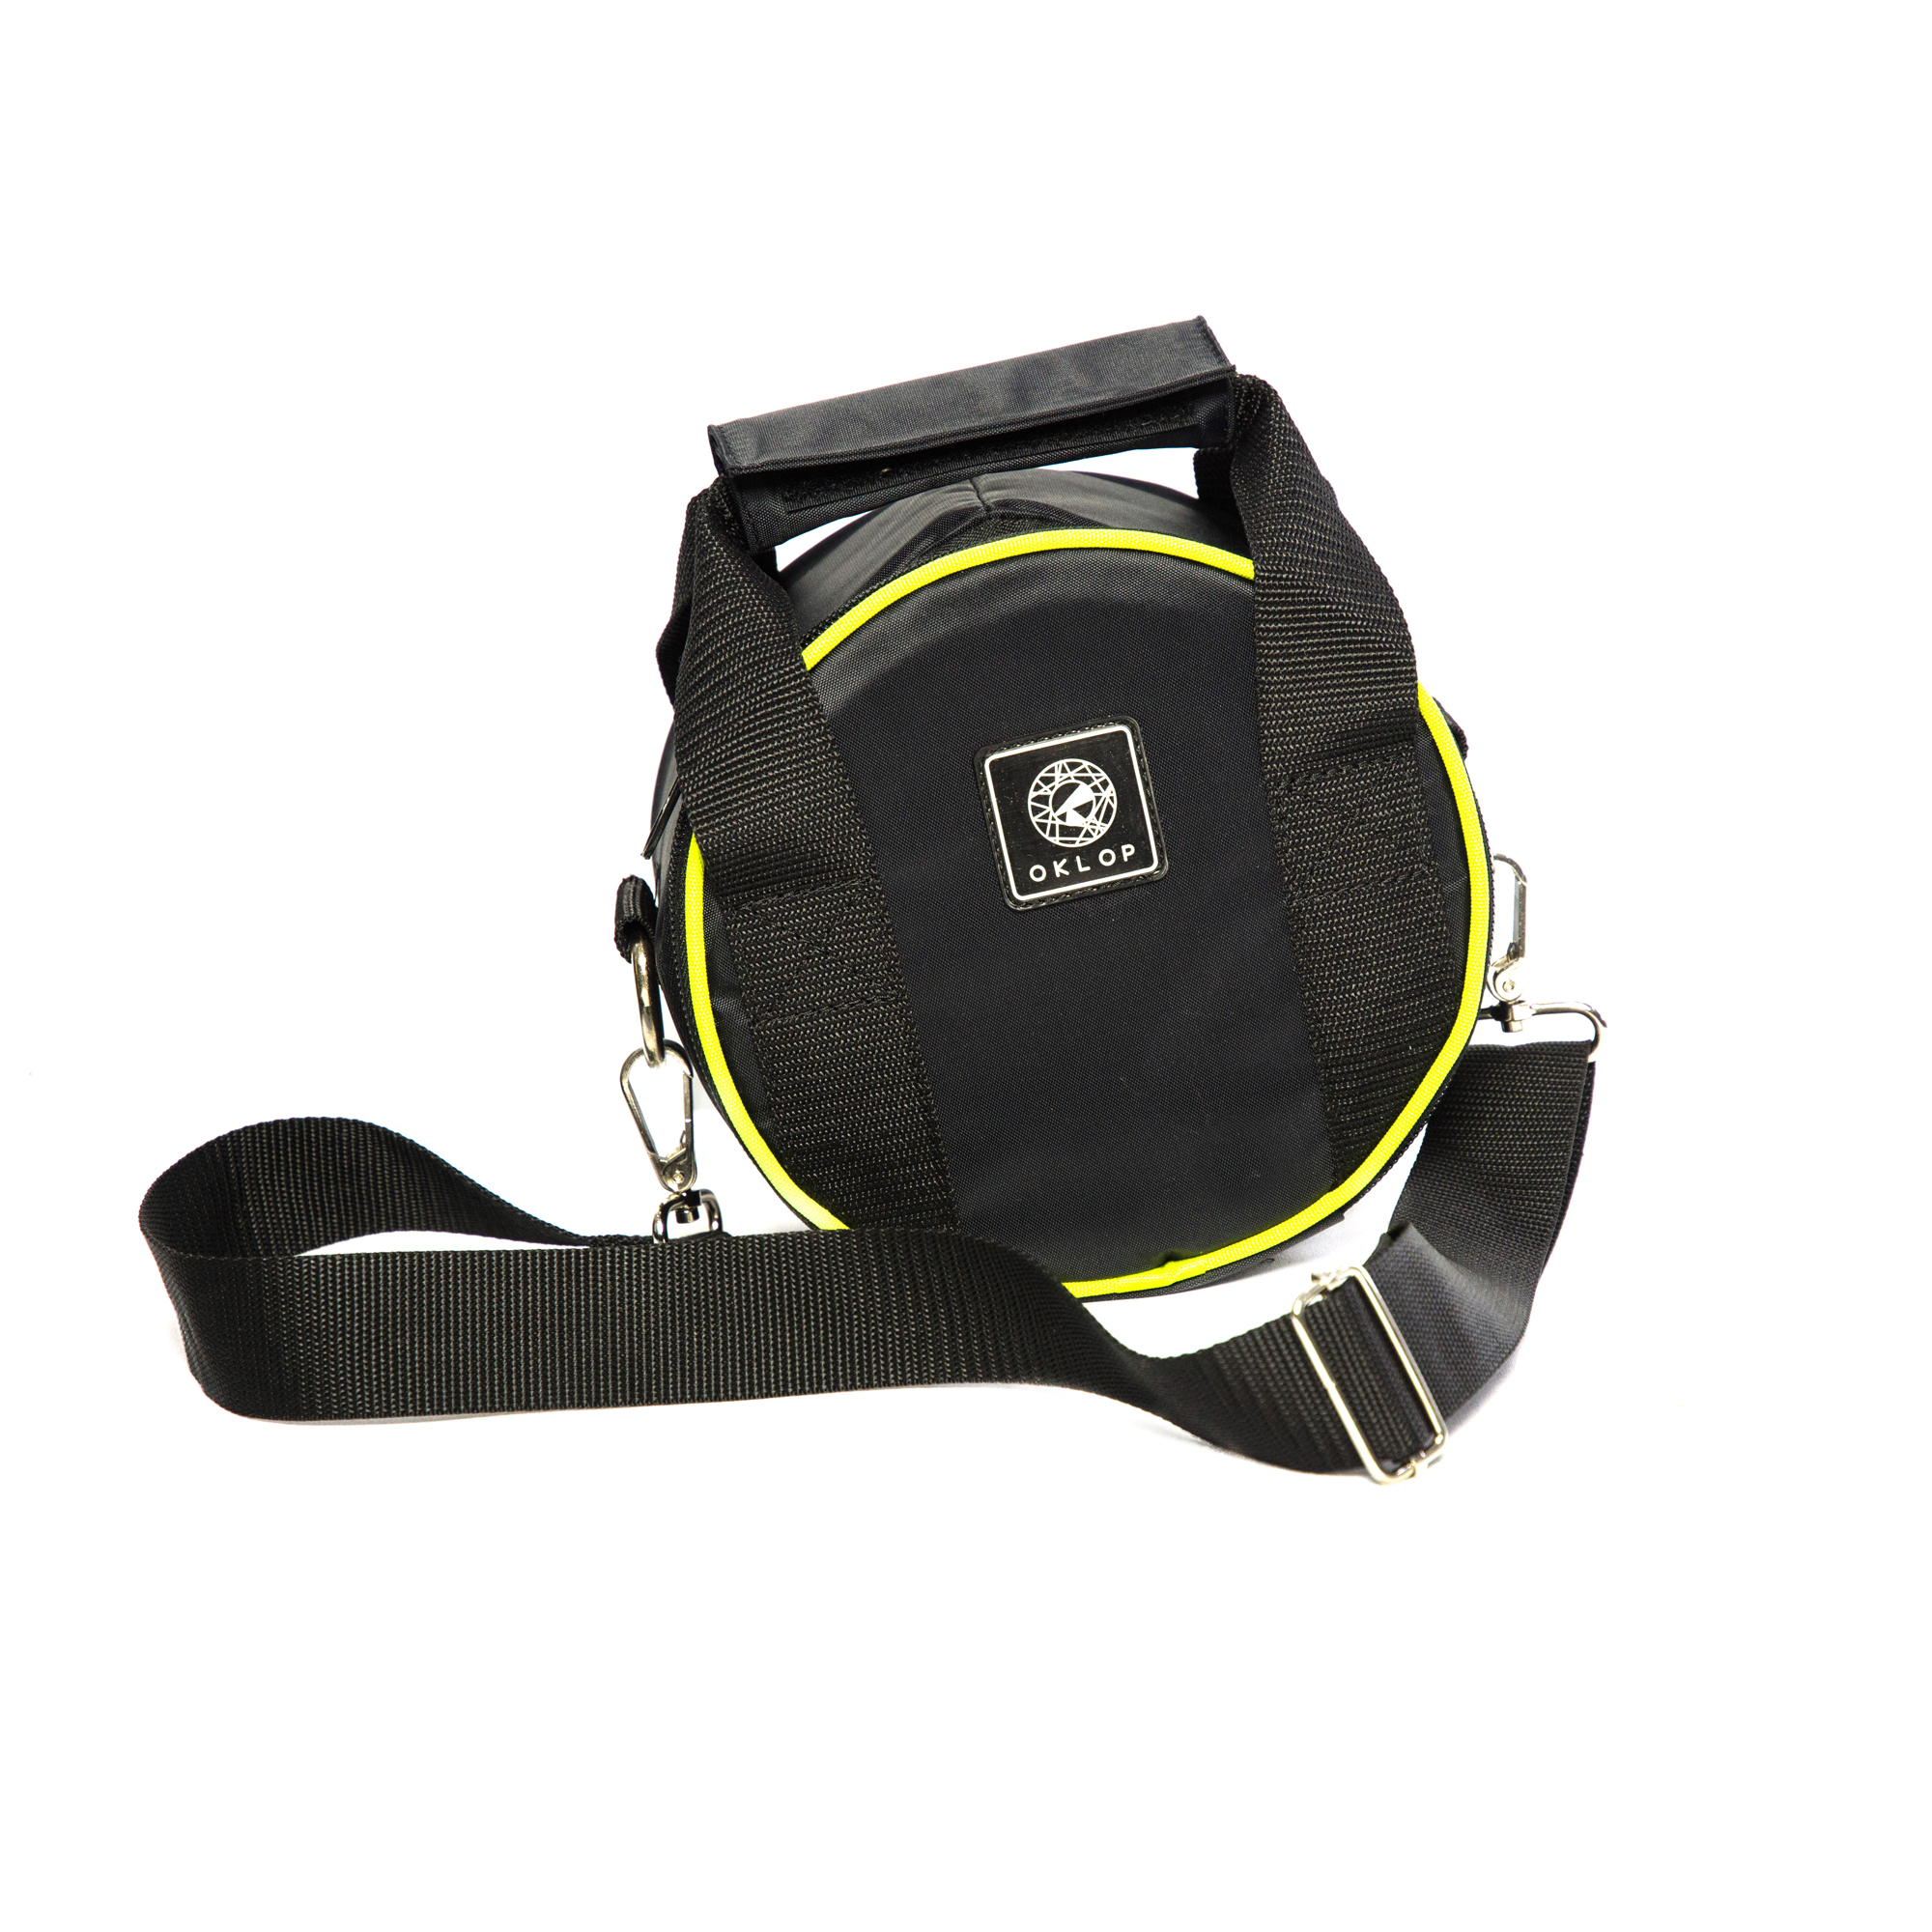 Oklop Padded Bag for 2x 5kg counterweights | First Light Optics